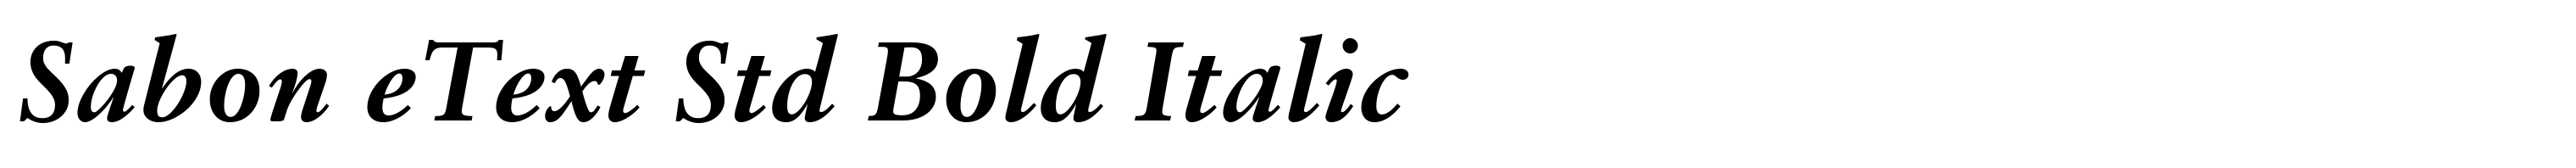 Sabon eText Std Bold Italic